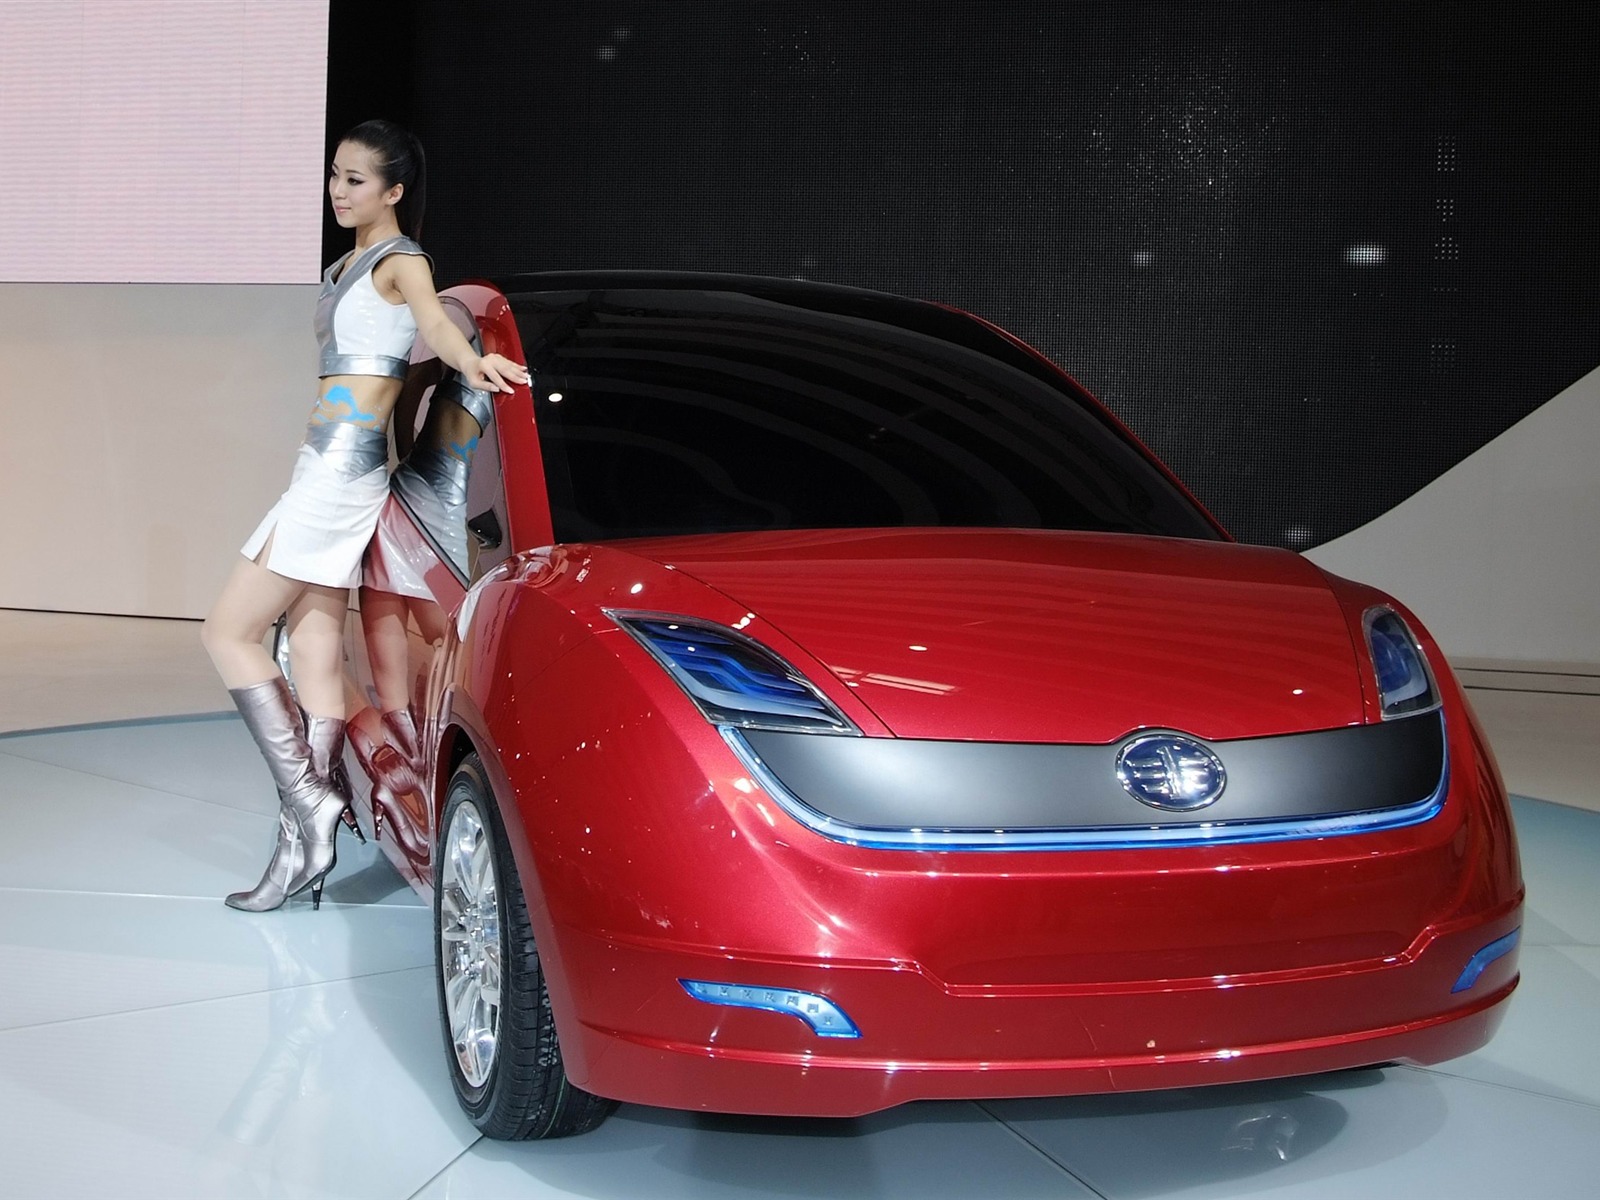 2010 Salón Internacional del Automóvil de Beijing Heung Che belleza (obras barras de refuerzo) #24 - 1600x1200